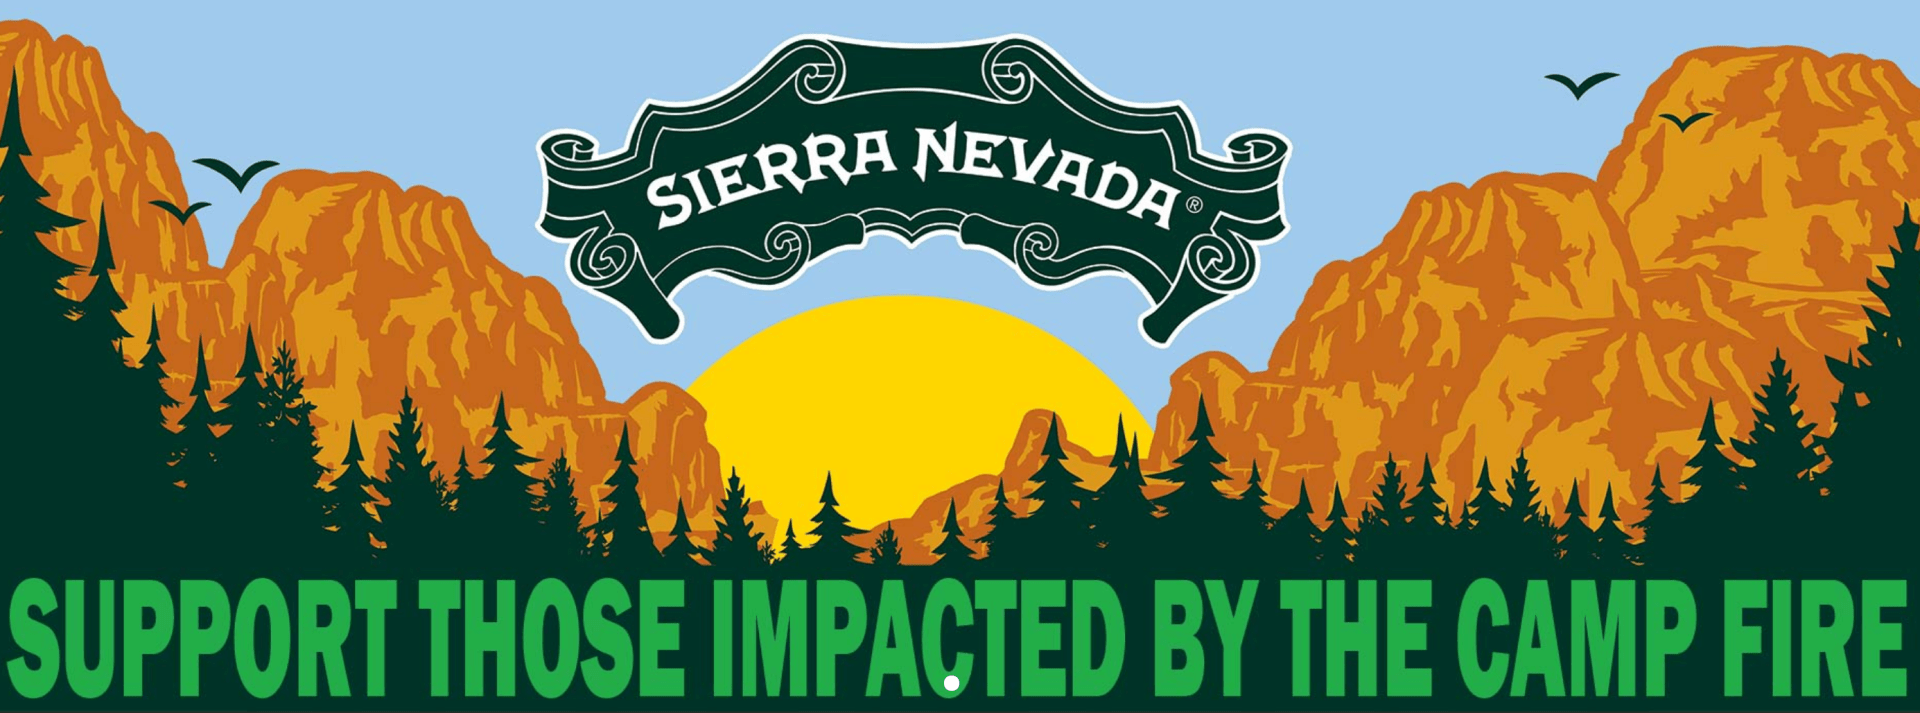 2018 Sierra Nevada Logo - Sierra Nevada Resilience Beer victims of California's